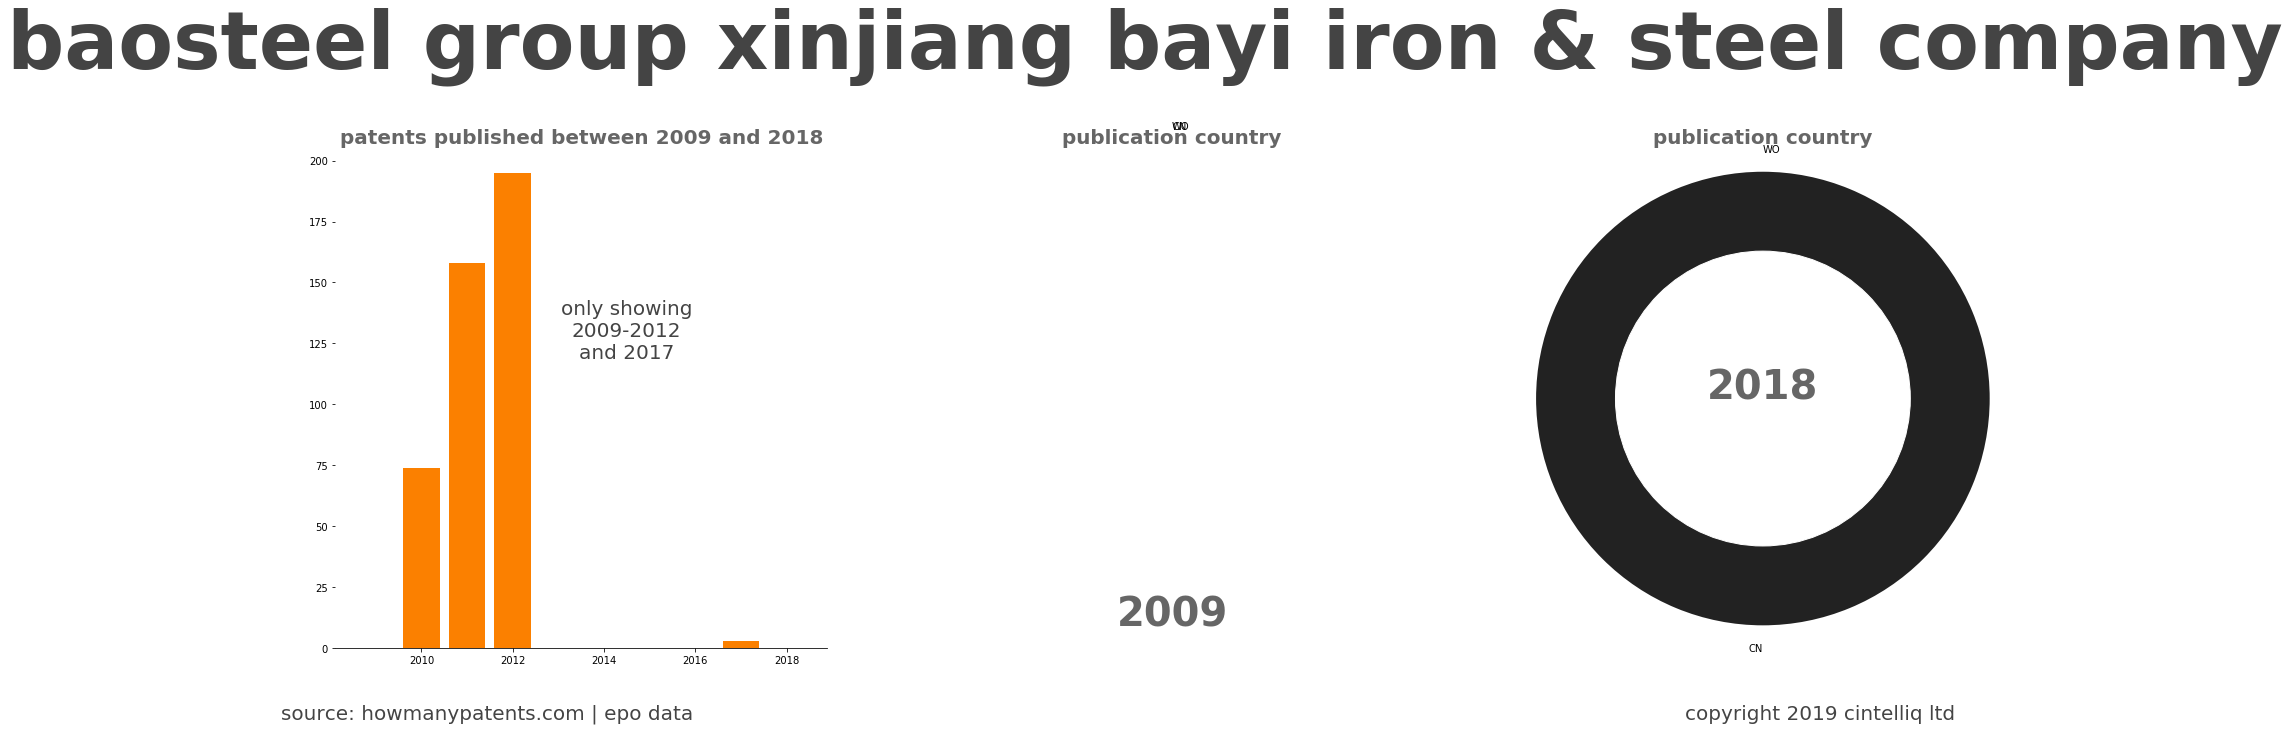 summary of patents for Baosteel Group Xinjiang Bayi Iron & Steel Company